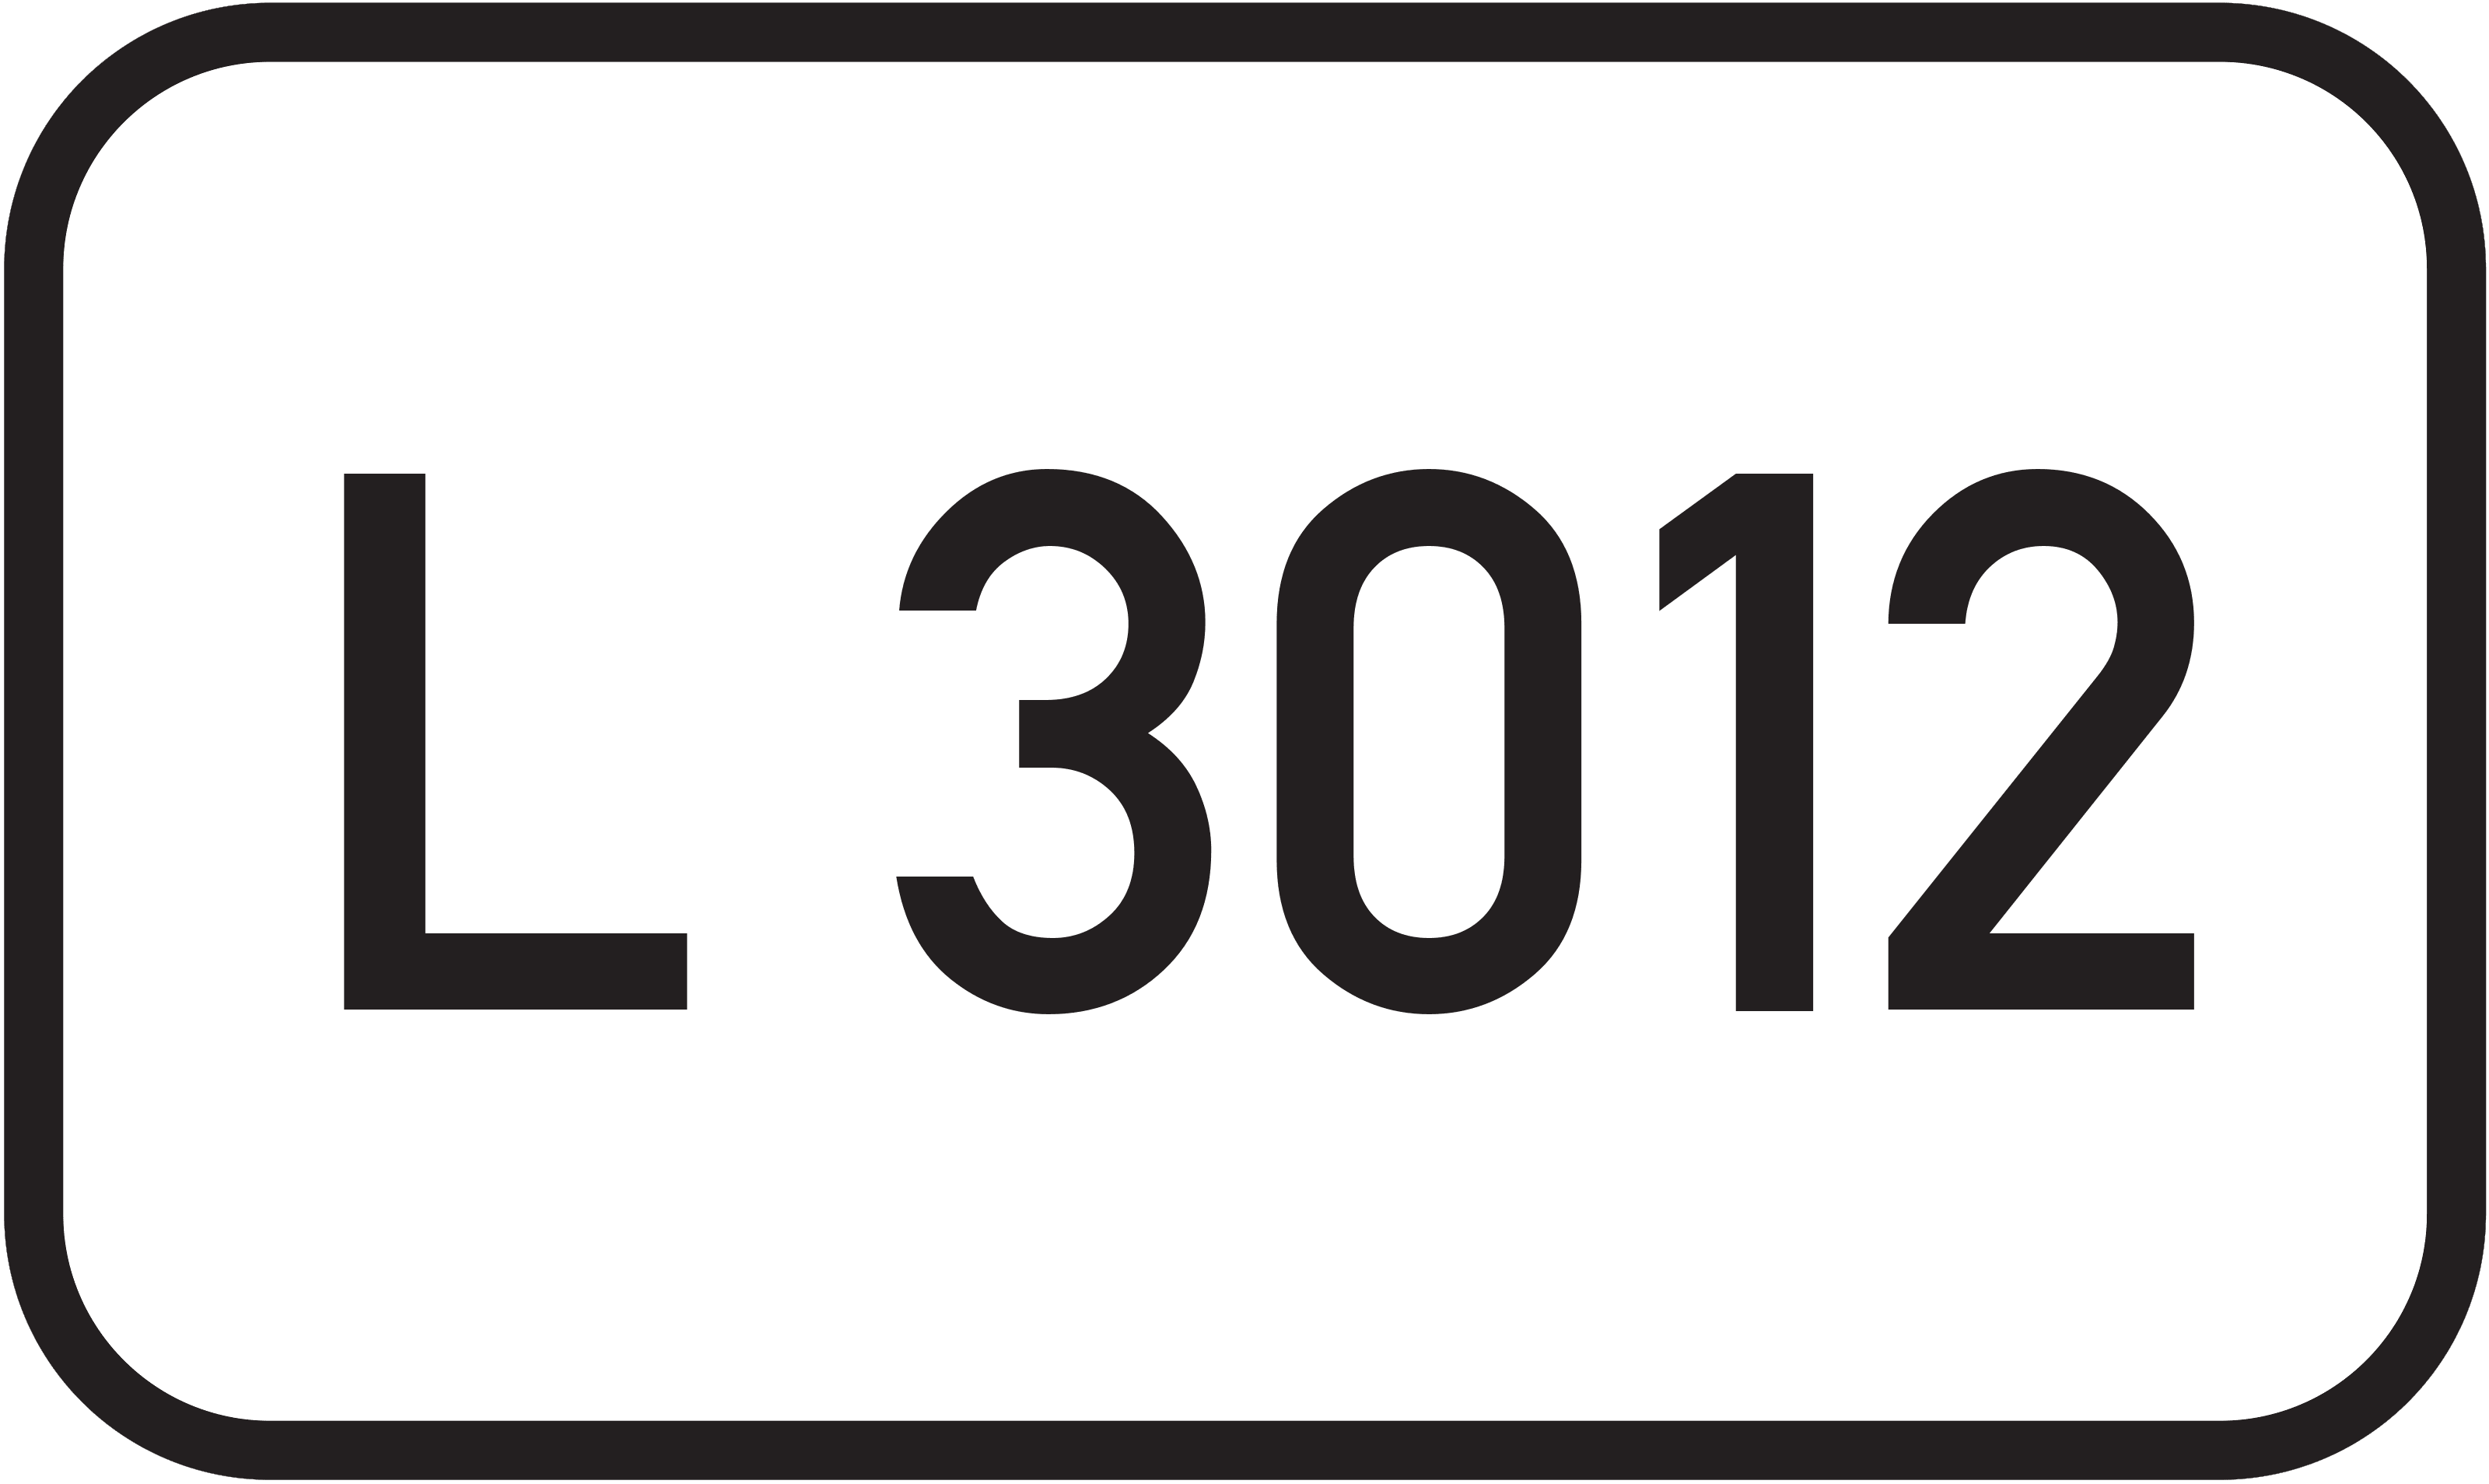 Straßenschild Landesstraße L 3012